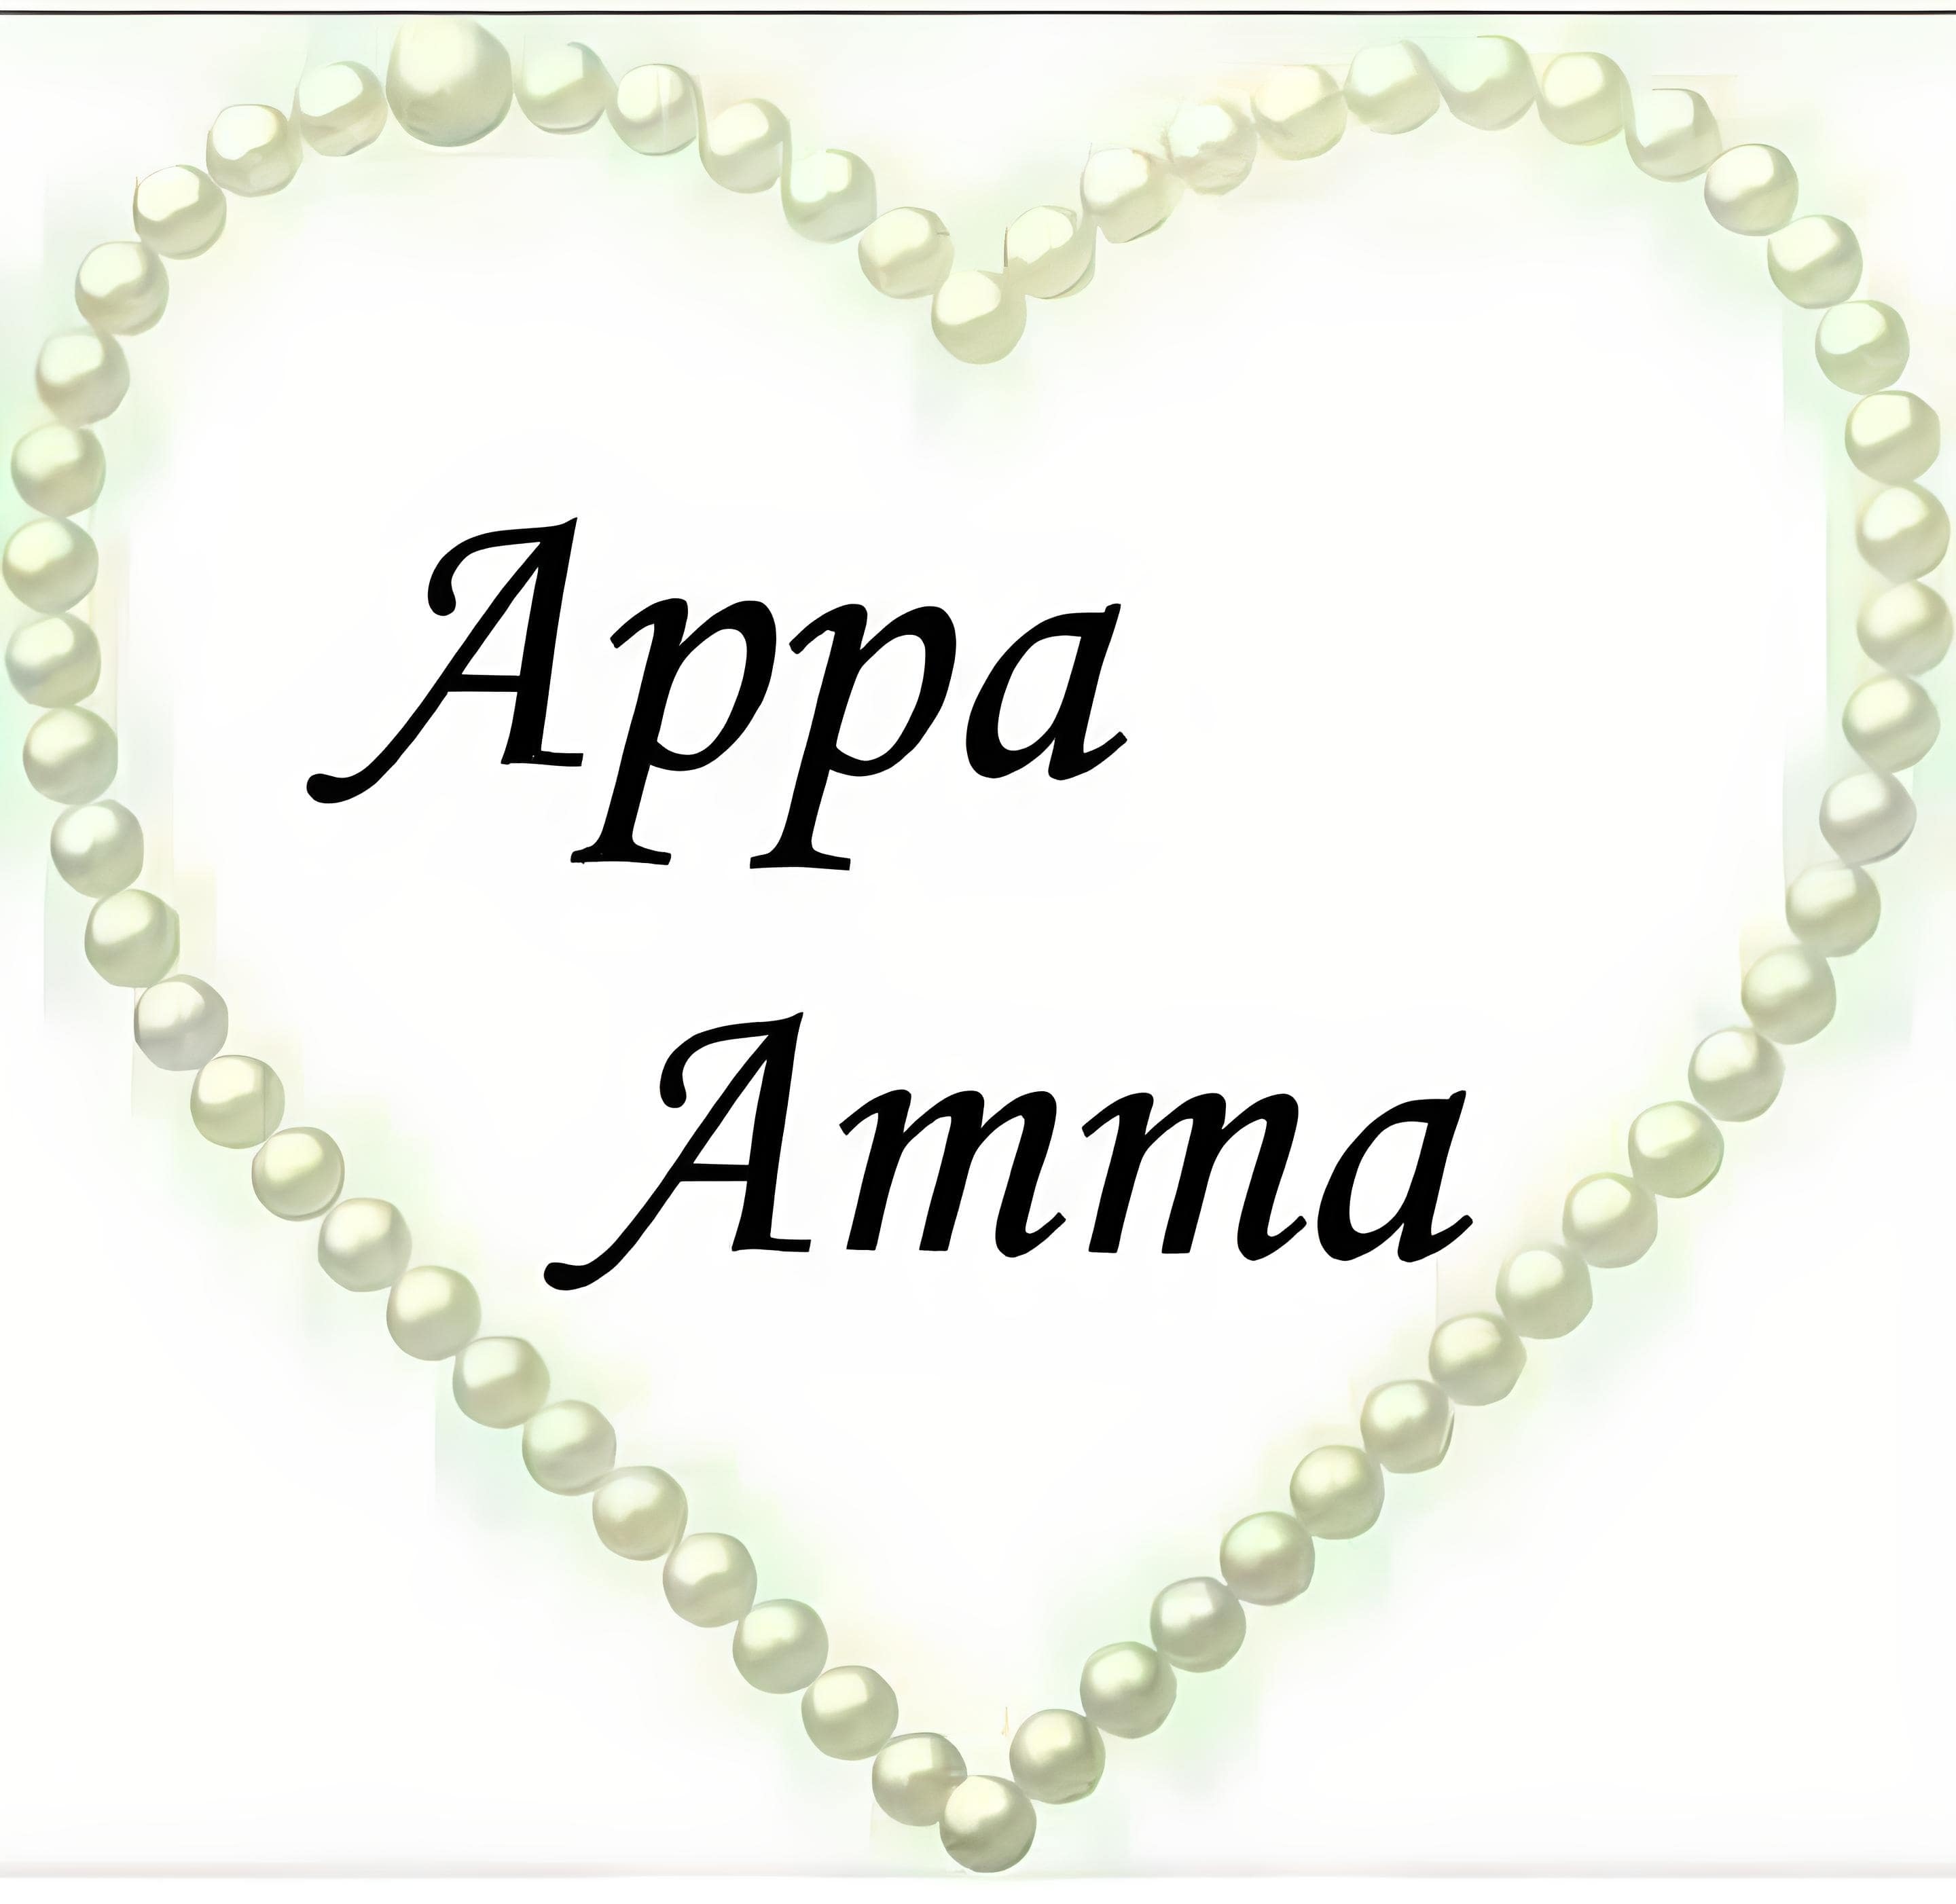 Appa Amma - Heart Shaped